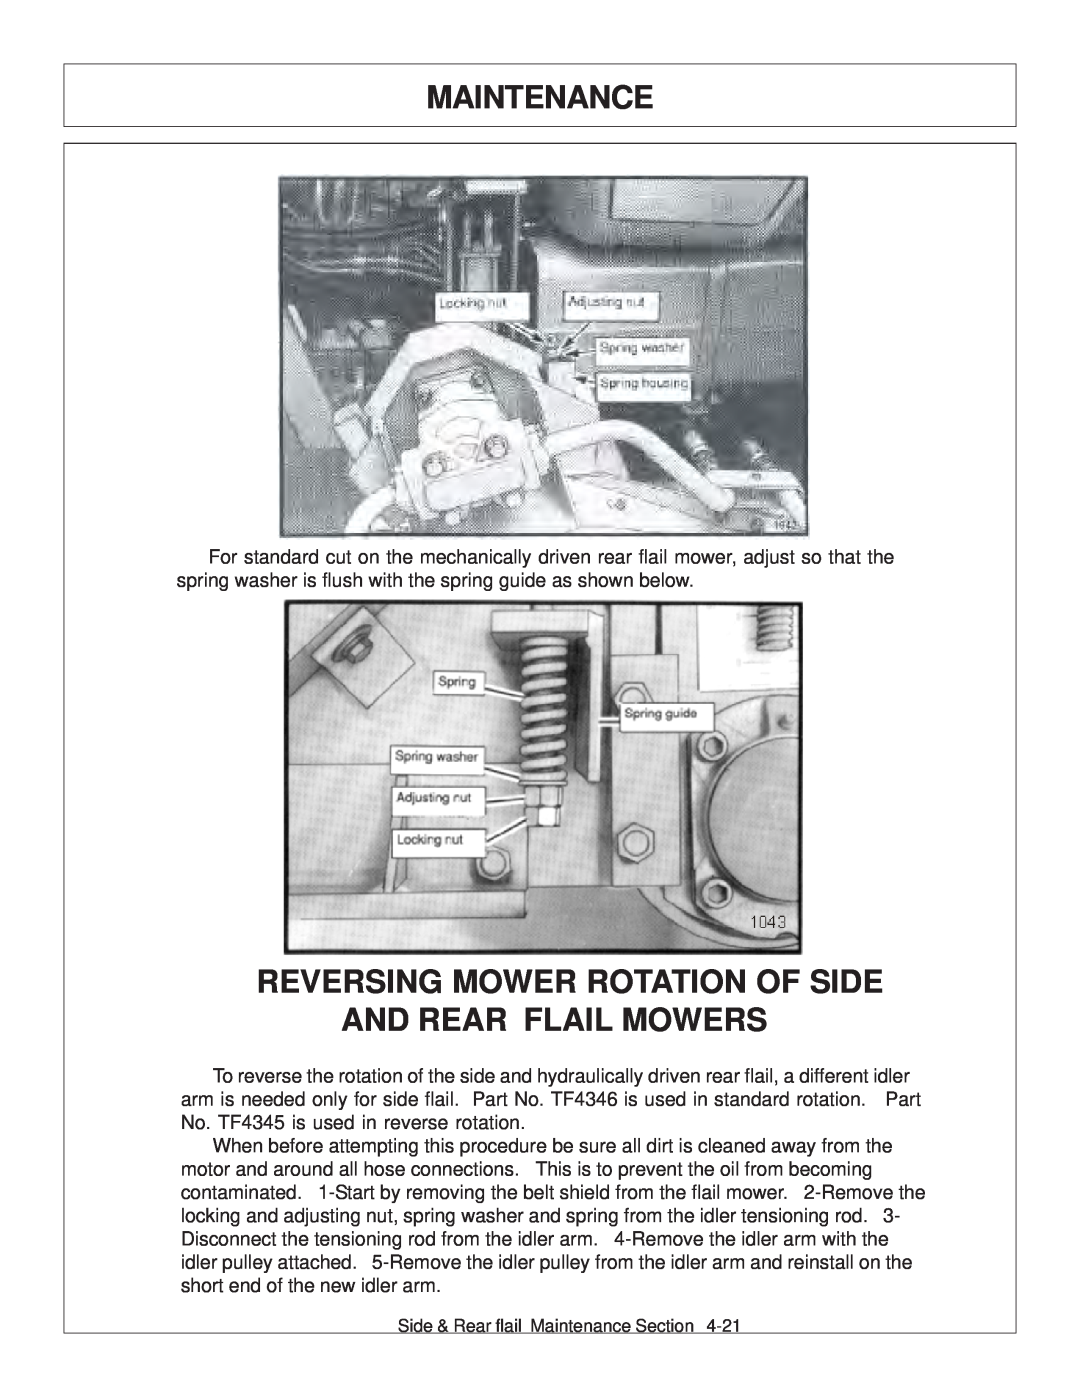 Tiger JD 5101E, JD 5083E, JD 5093E manual Reversing Mower Rotation Of Side And Rear Flail Mowers, Maintenance 